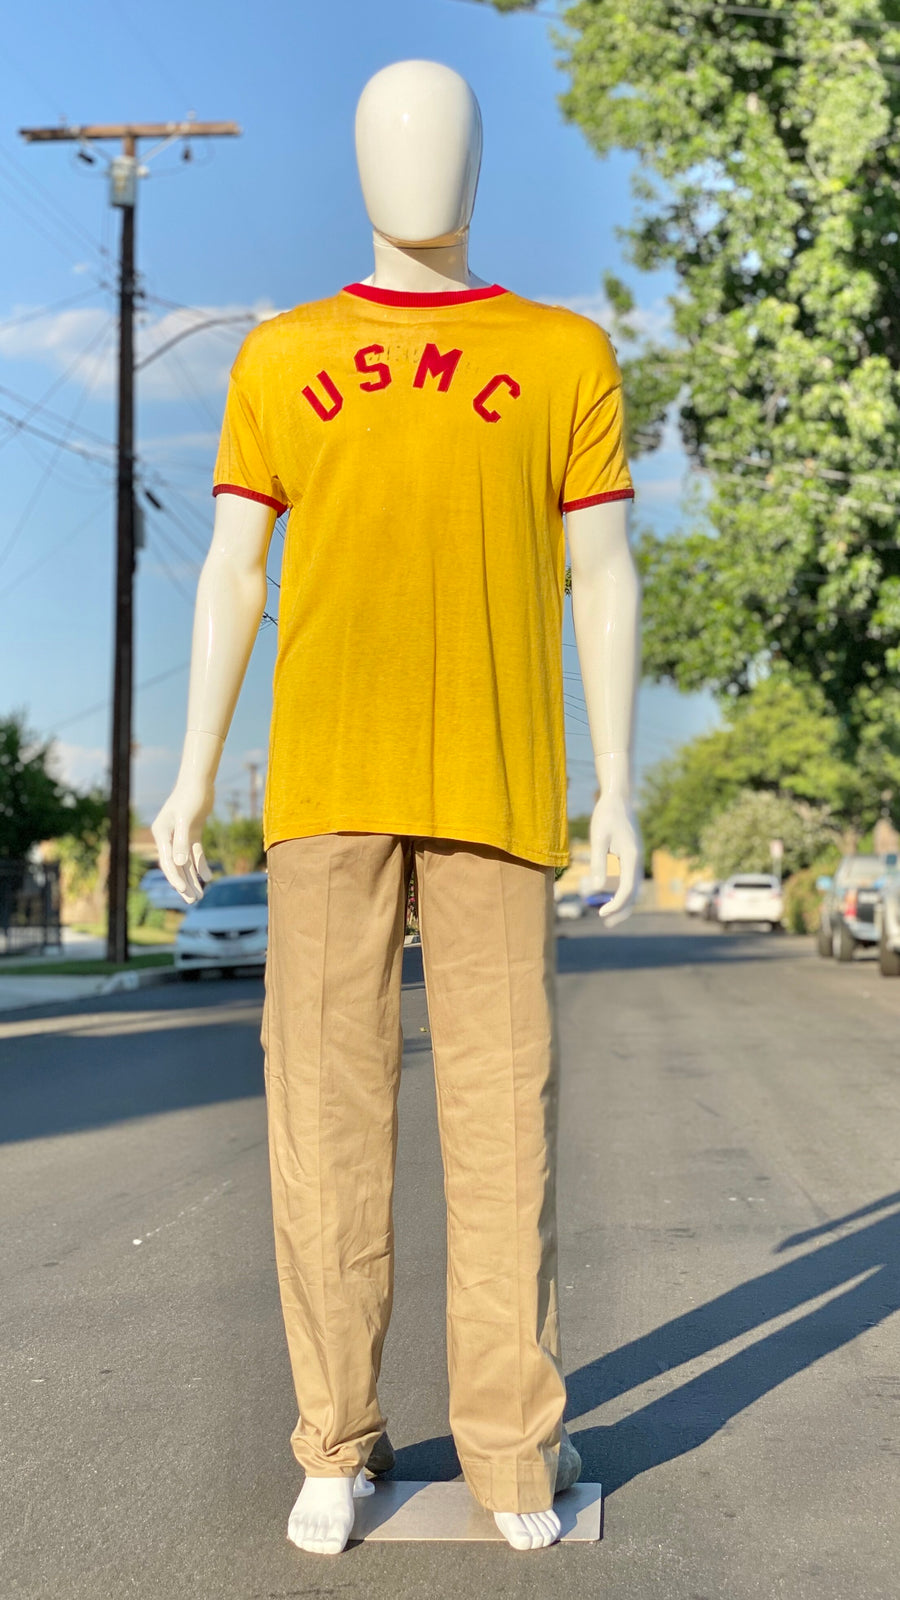 60s U.S.M.C. Shirt